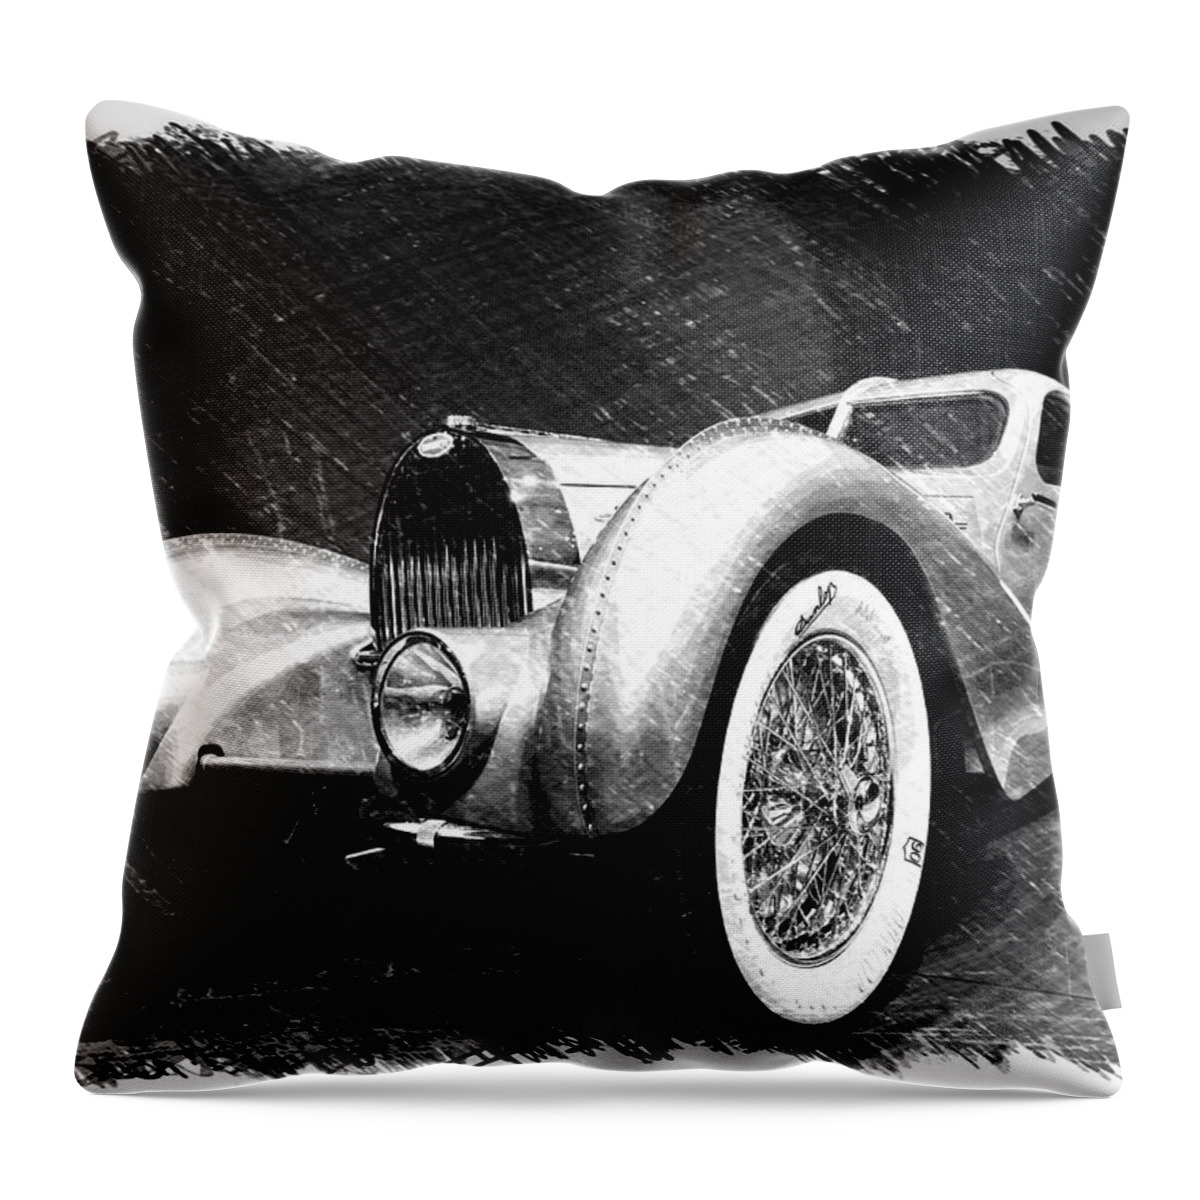 Bugatti Throw Pillow featuring the photograph Bugatti Type 57 Aerolithe by Dick Goodman